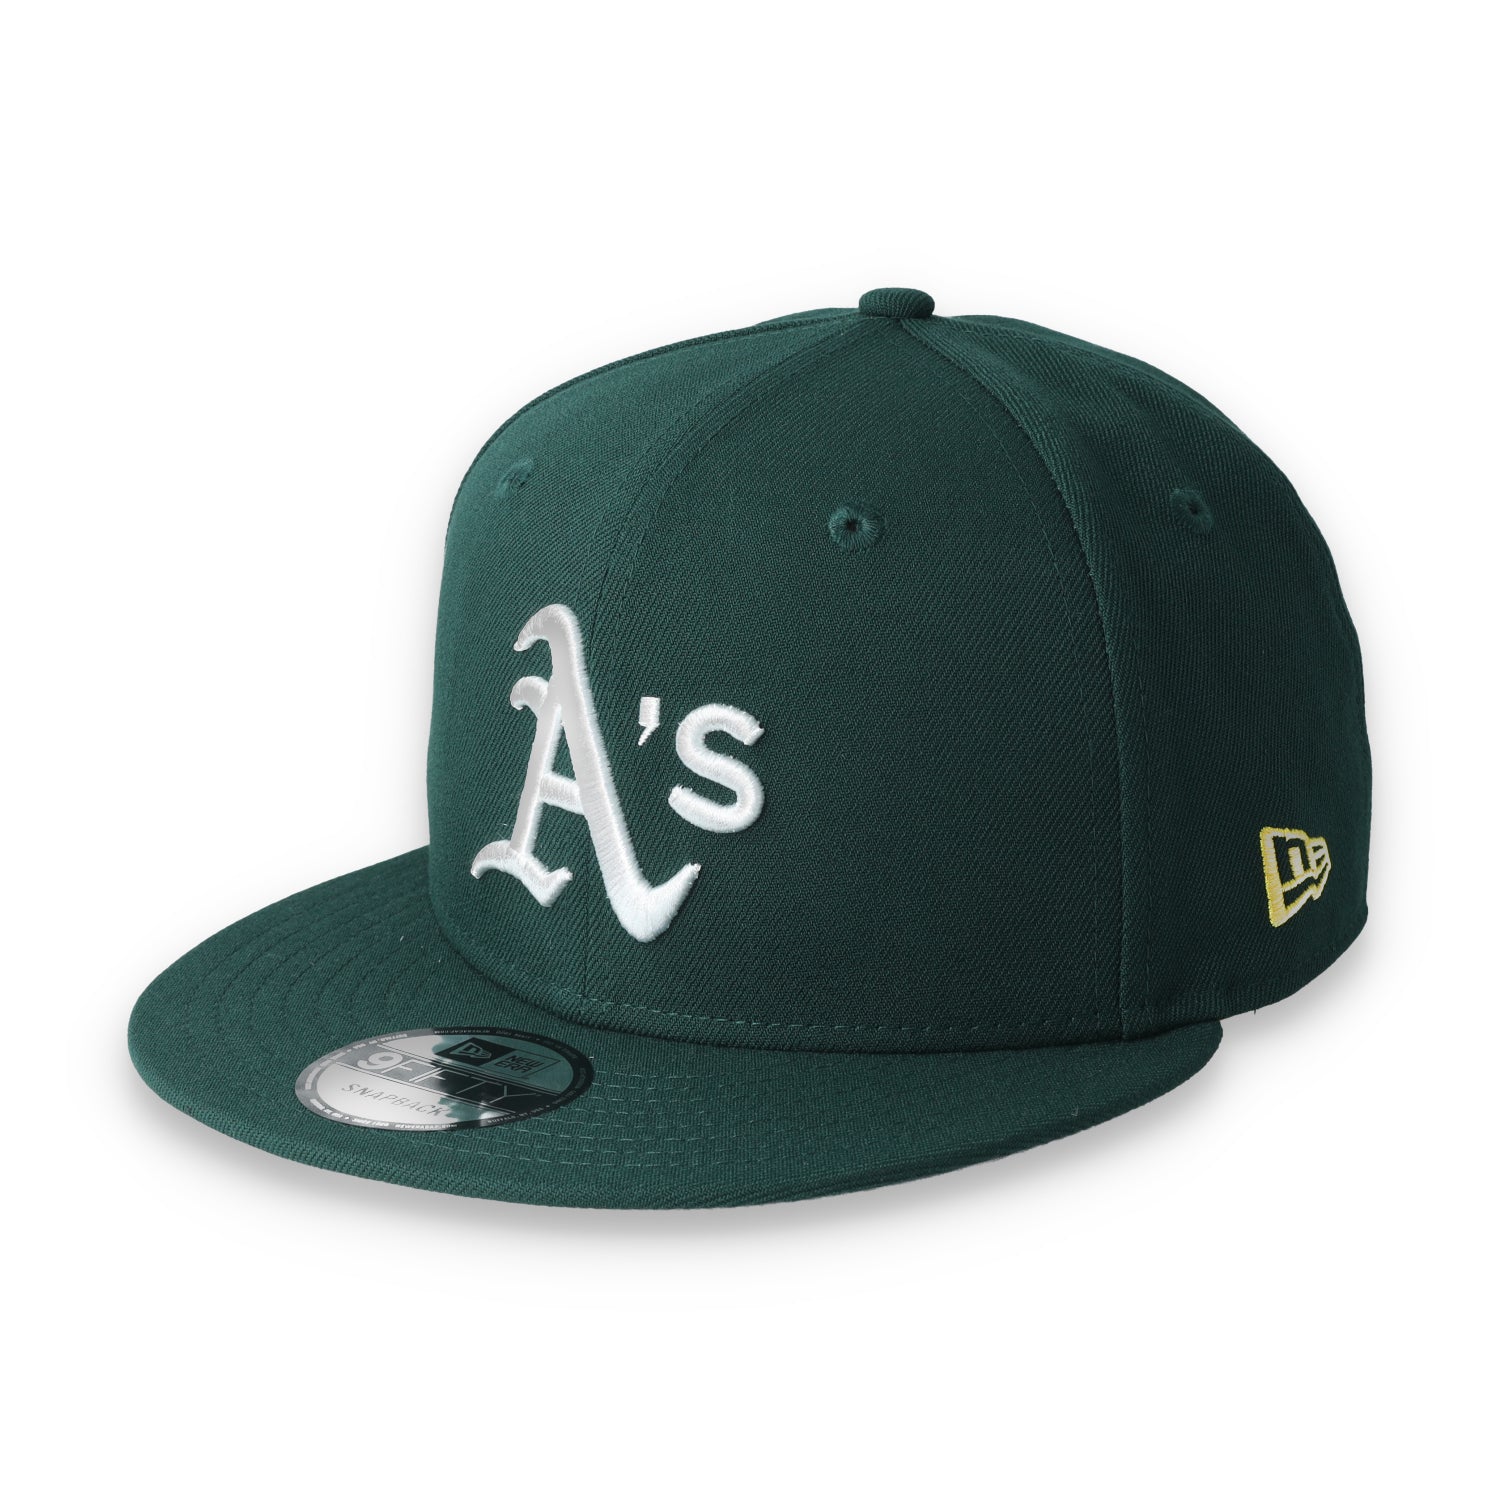 New Era Oakland Athletics  Patch E3 9FIFTY Snapback Hat